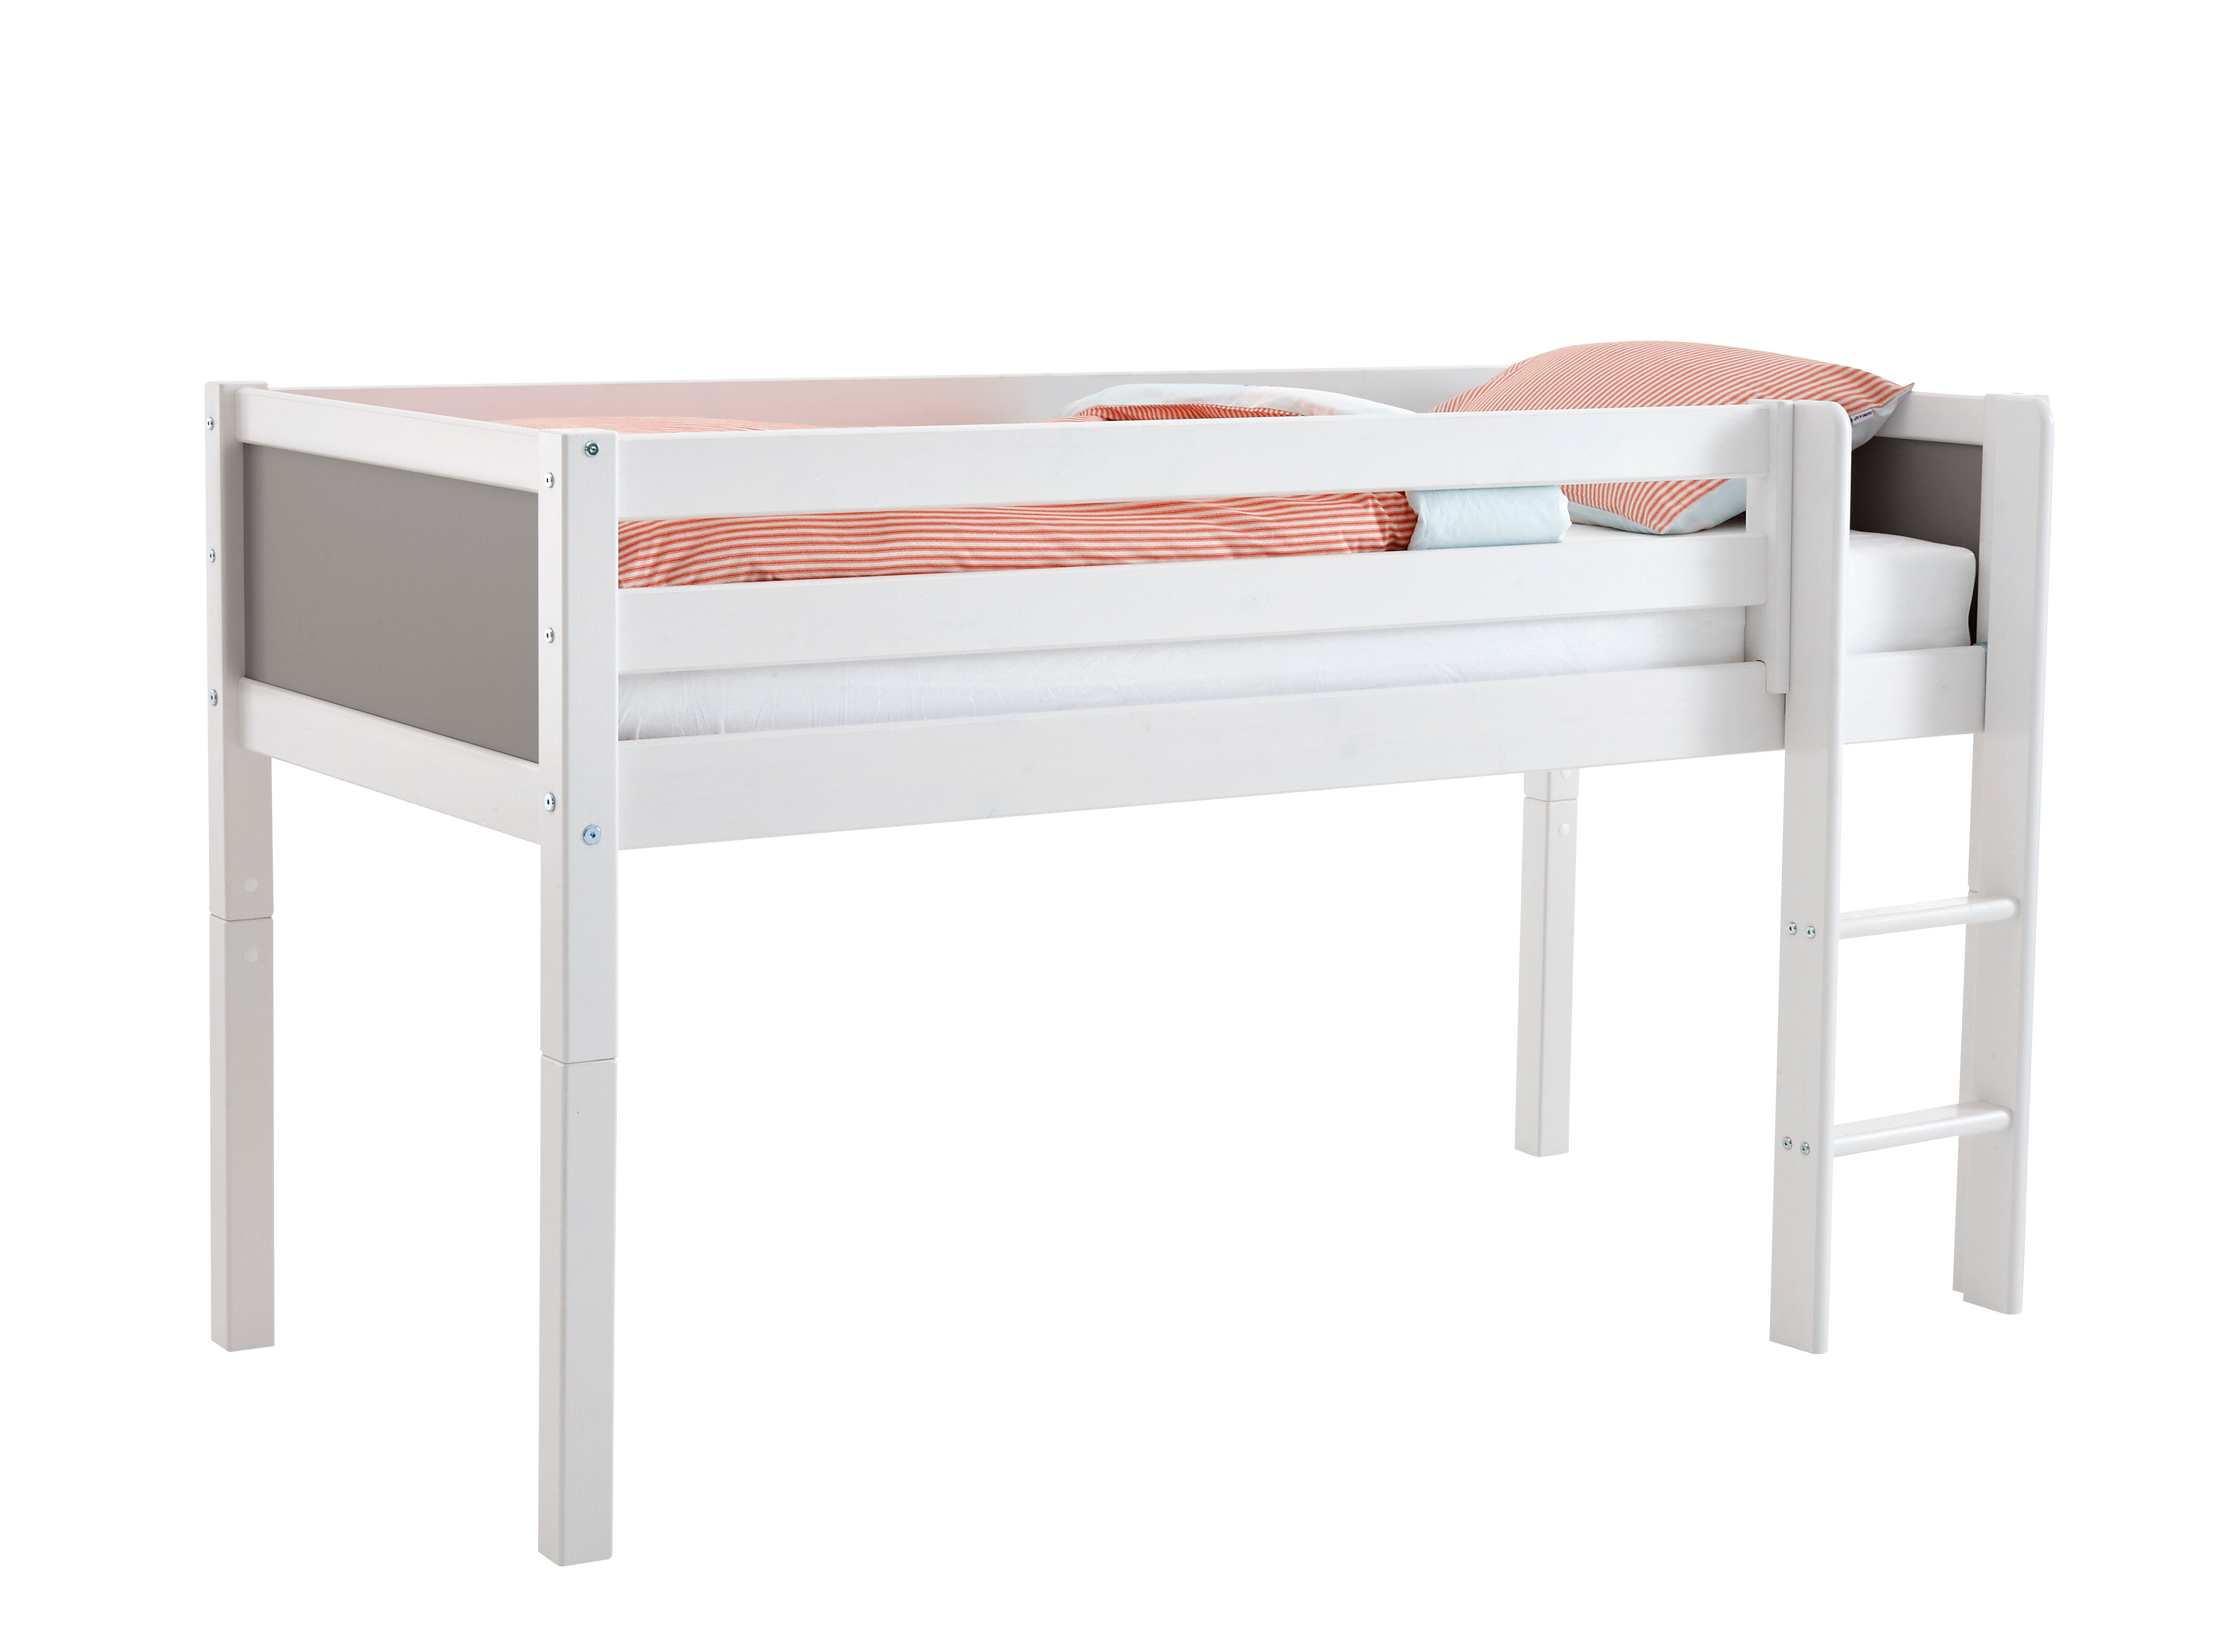 Flexa Basic Nordic barneseng halvhøy seng 90x200 cm, grå, hvit.